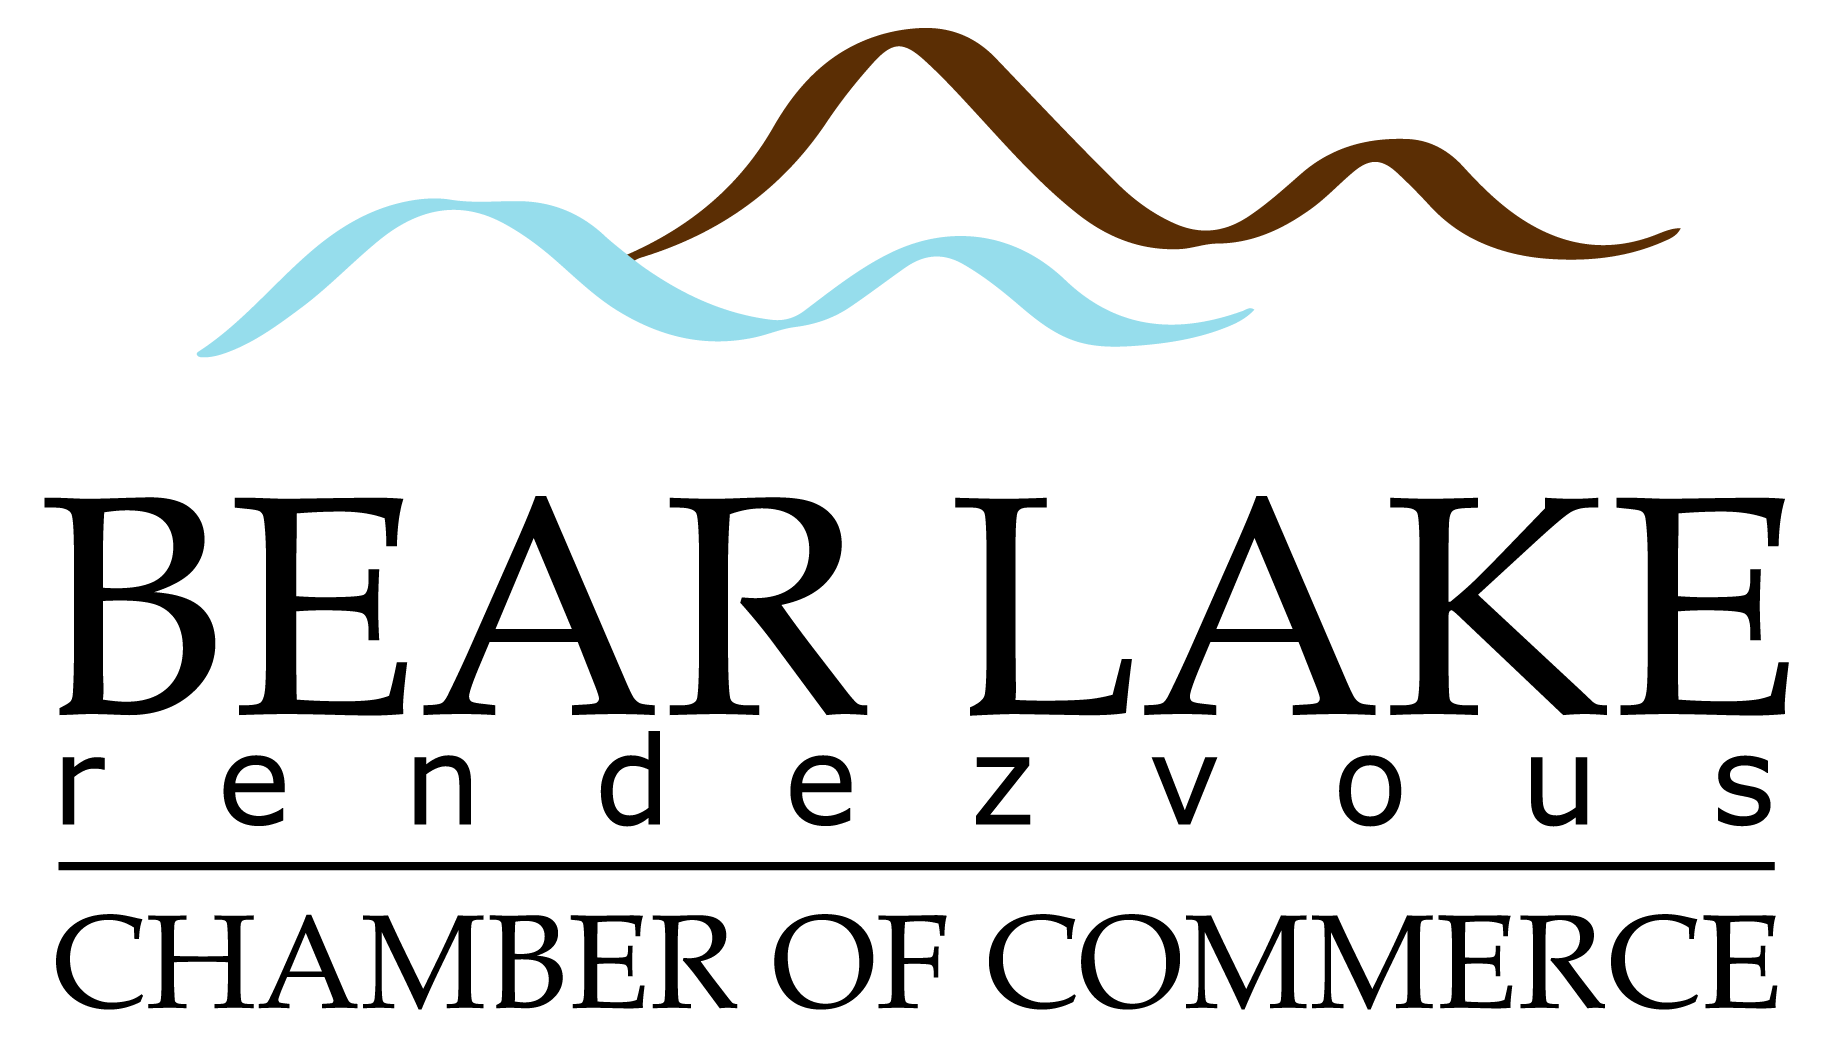 Bear Lake chamber of commerce